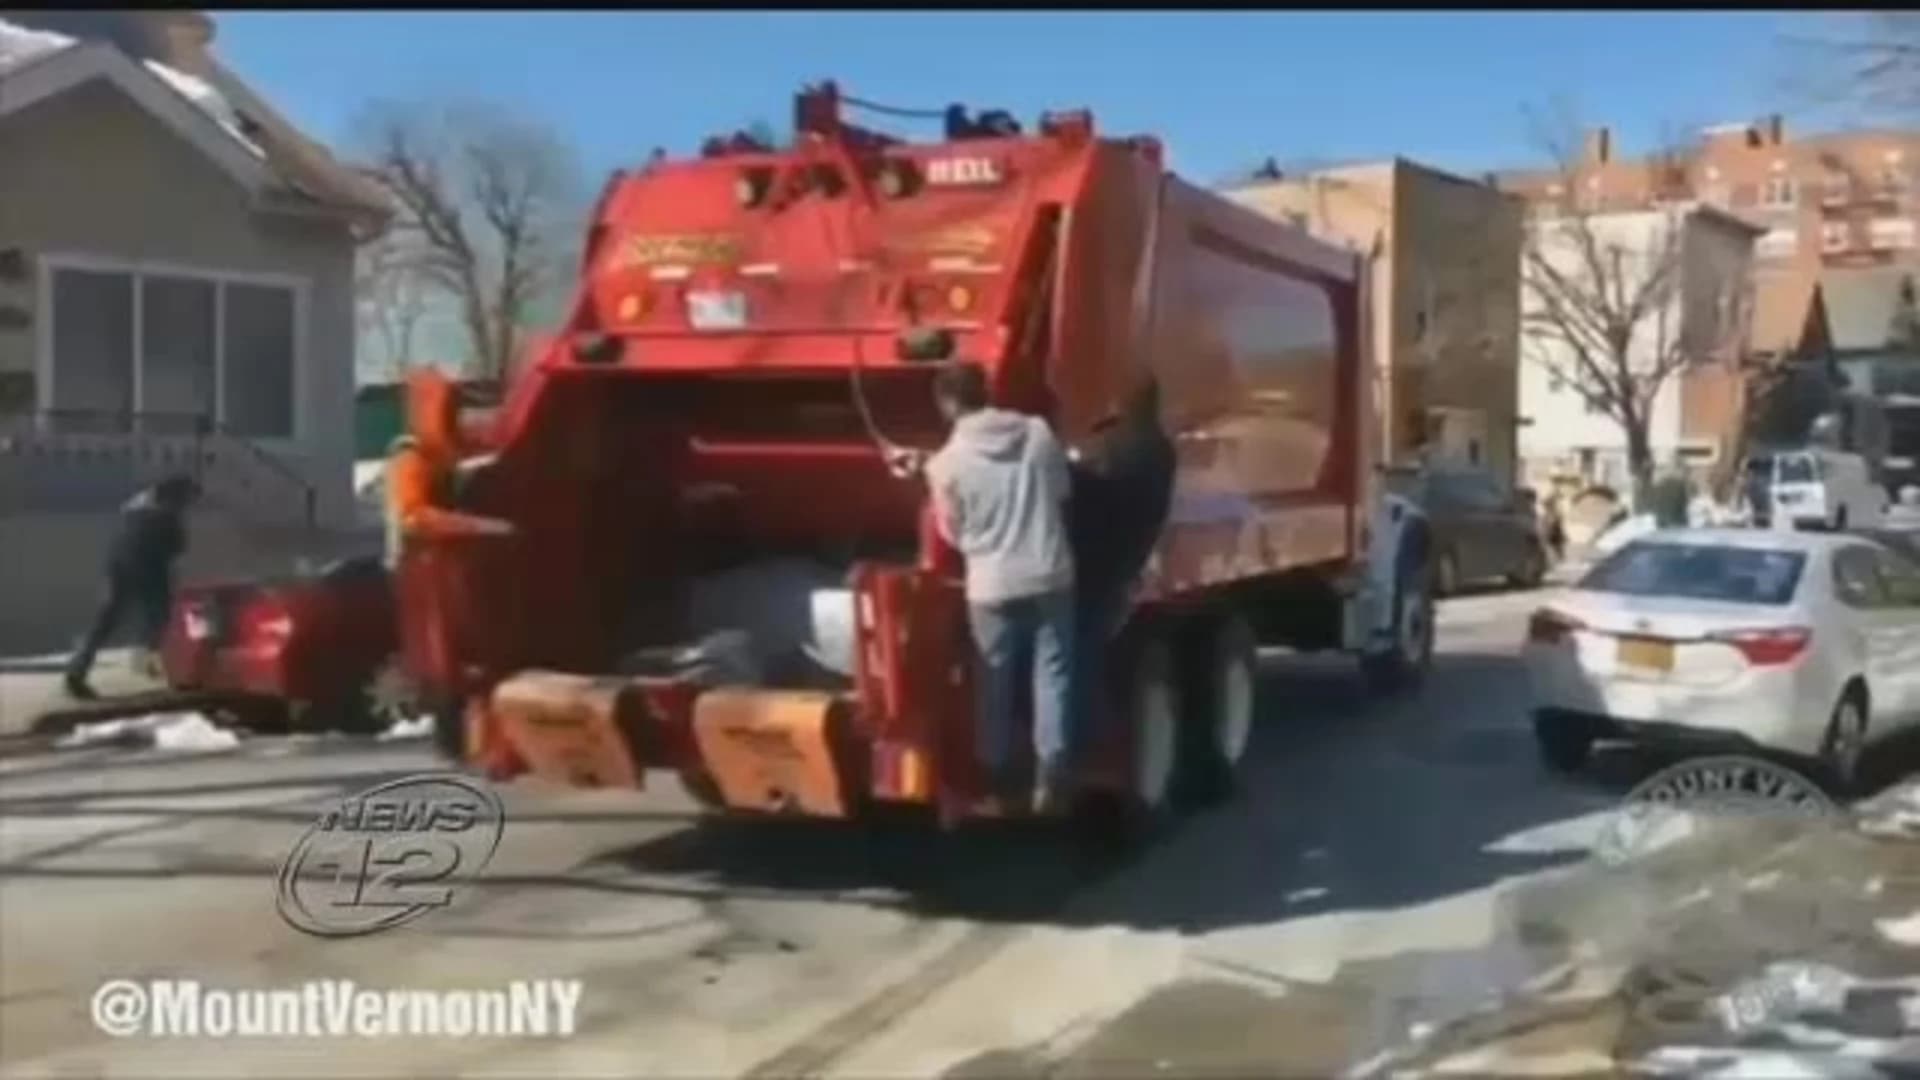 Mayor: Mt. Vernon gets emergency rental truck to address trash